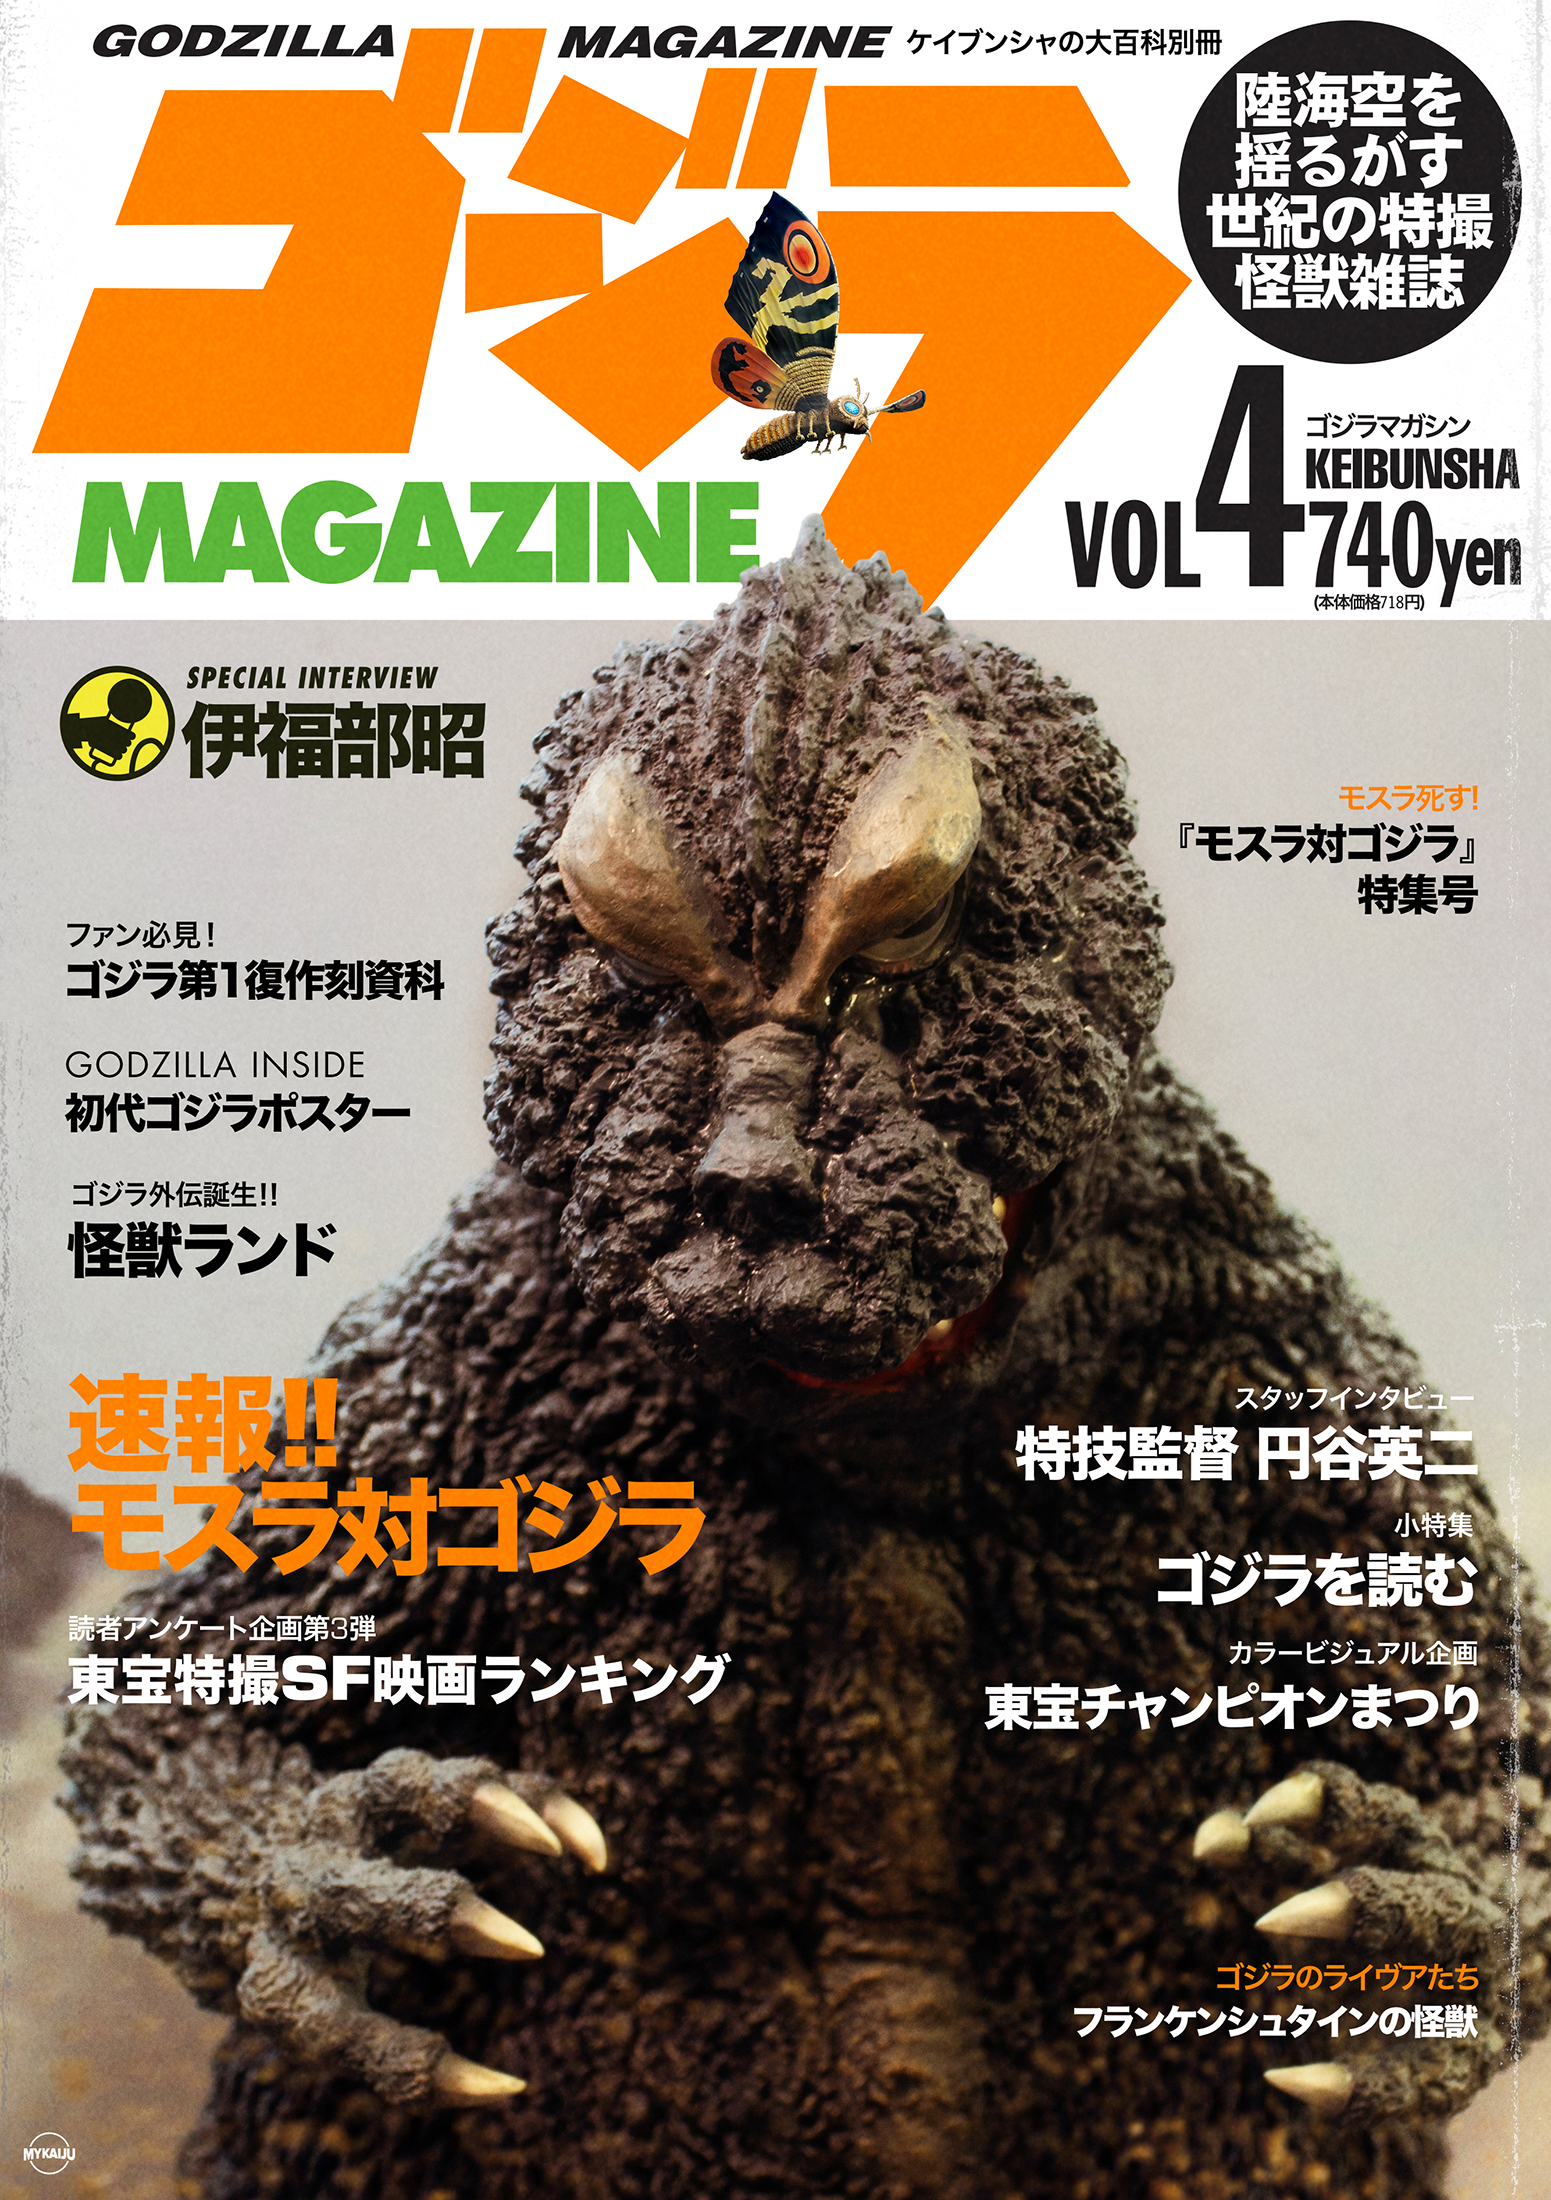 Faux Godzilla Magazine Cover featuring the X-Plus Gigantic Godzilla 1964